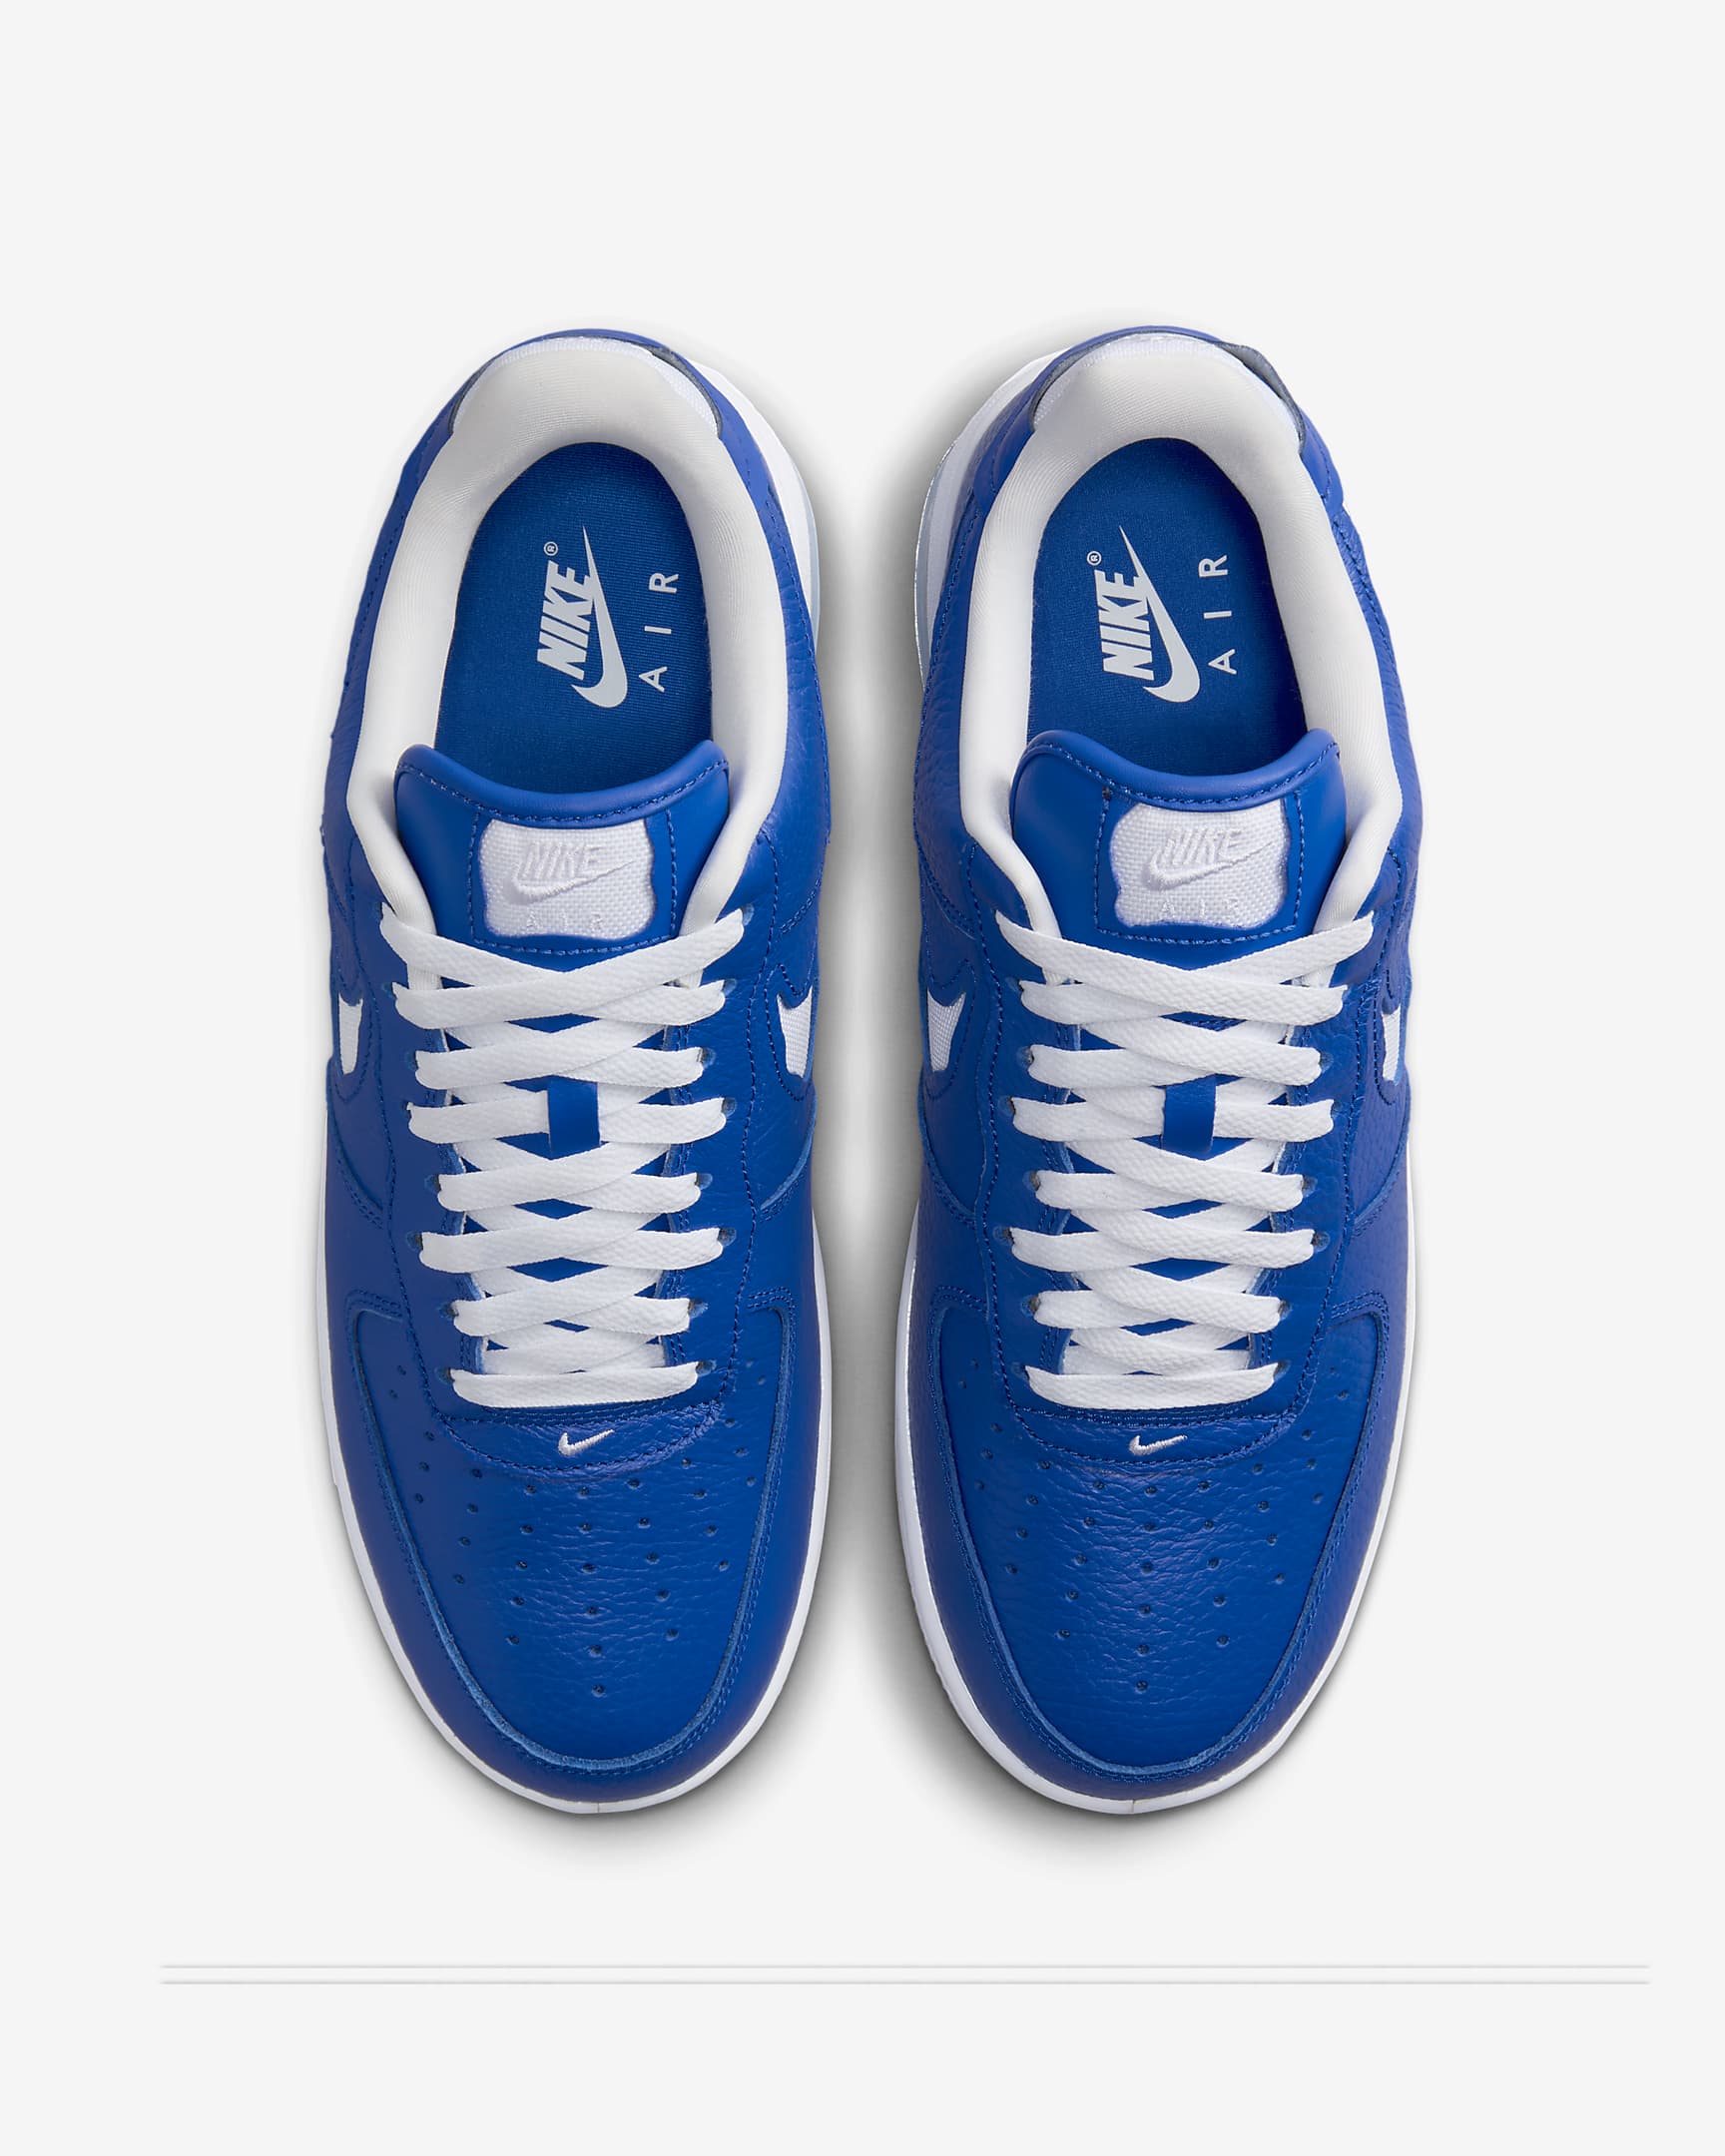 Nike Air Force 1 Low EVO Men's Shoes - Team Royal/Aquarius Blue/Gum Yellow/White